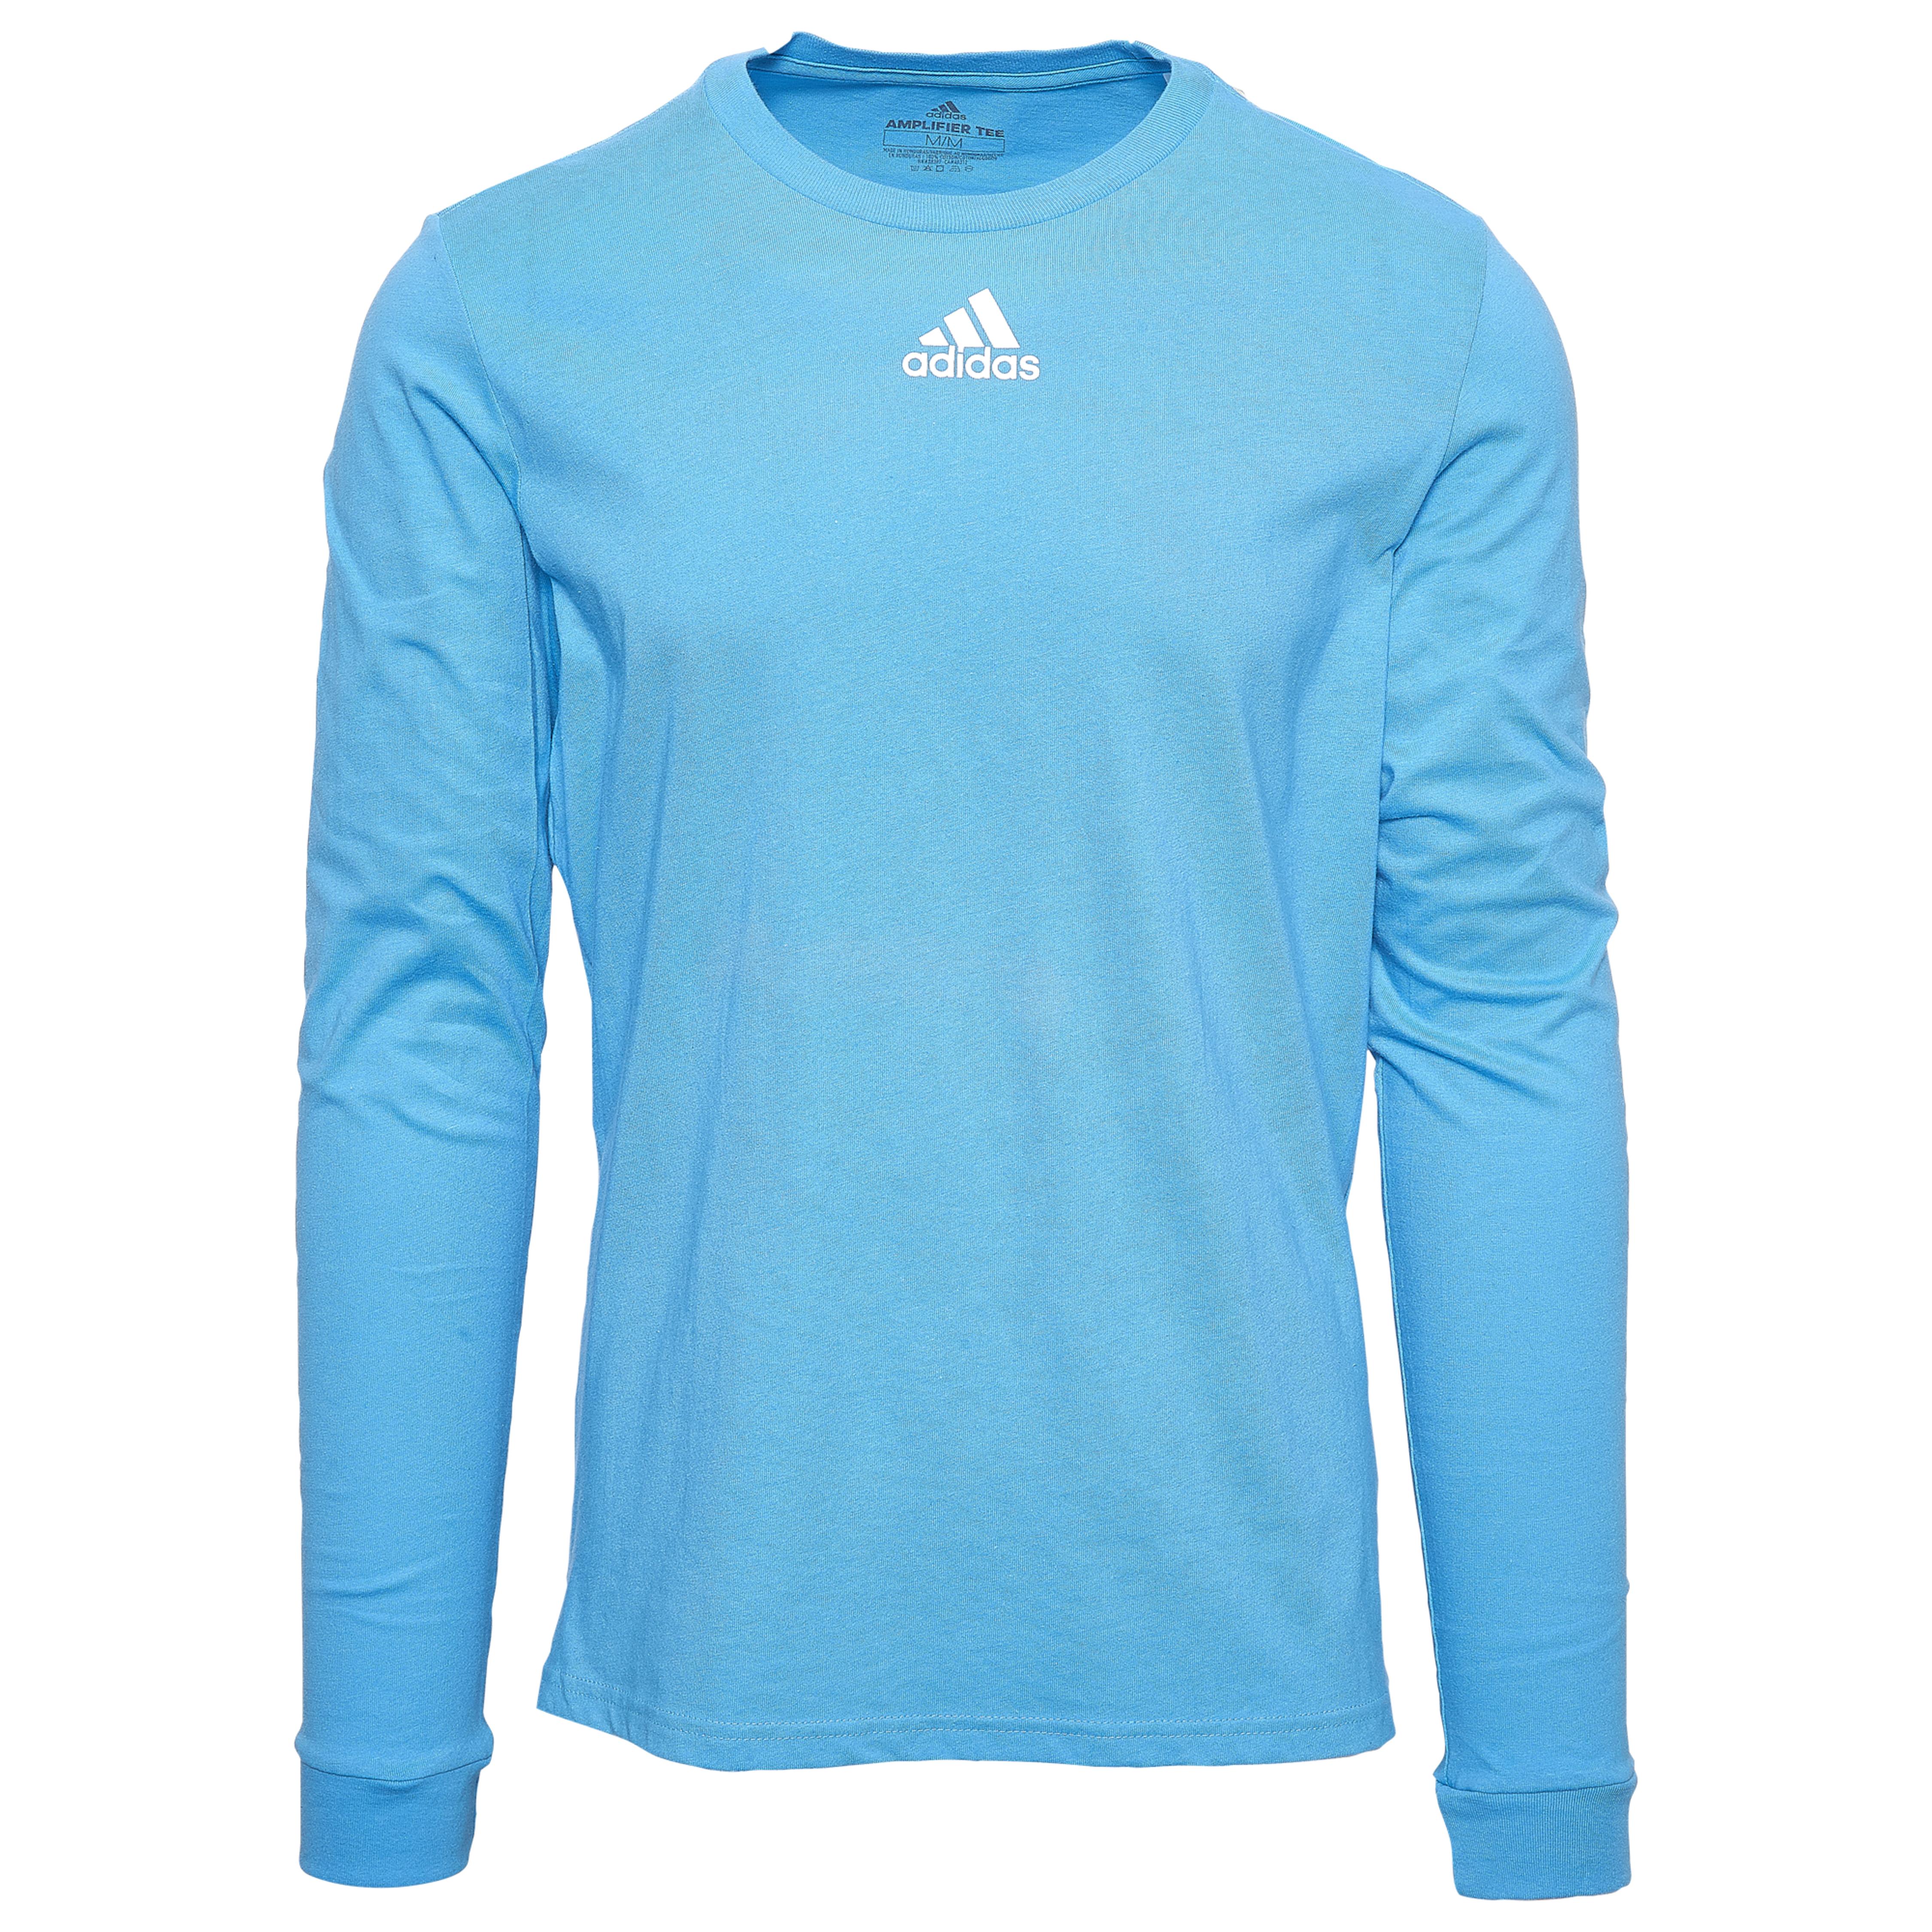 adidas Cotton Team Amplifier Long Sleeve T-shirt in Light Blue (Blue) for  Men - Lyst